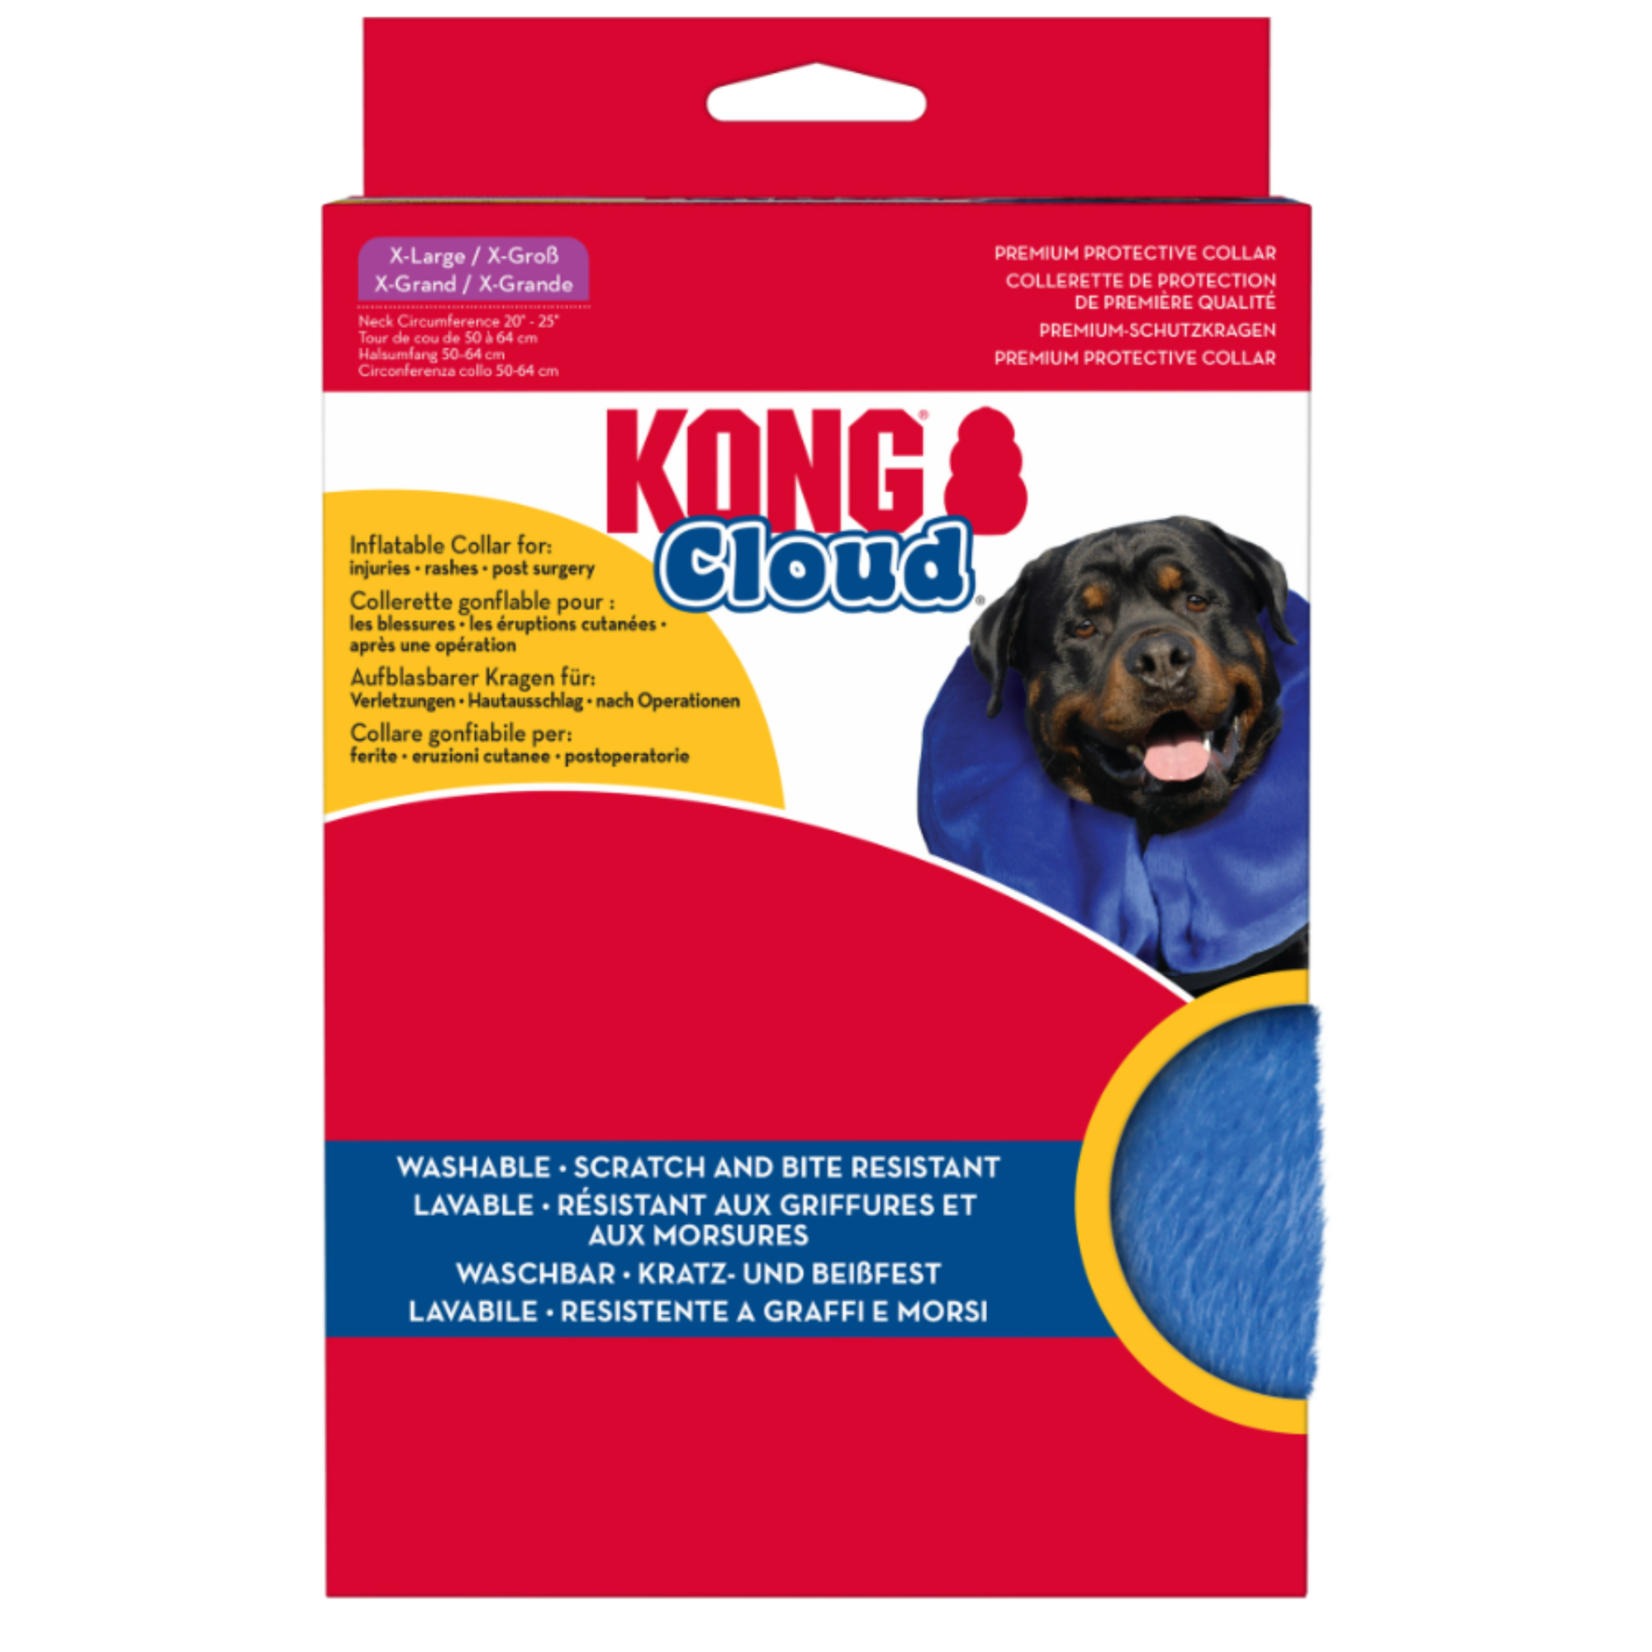 Kong Kong: Cloud Inflatable Protective Collar